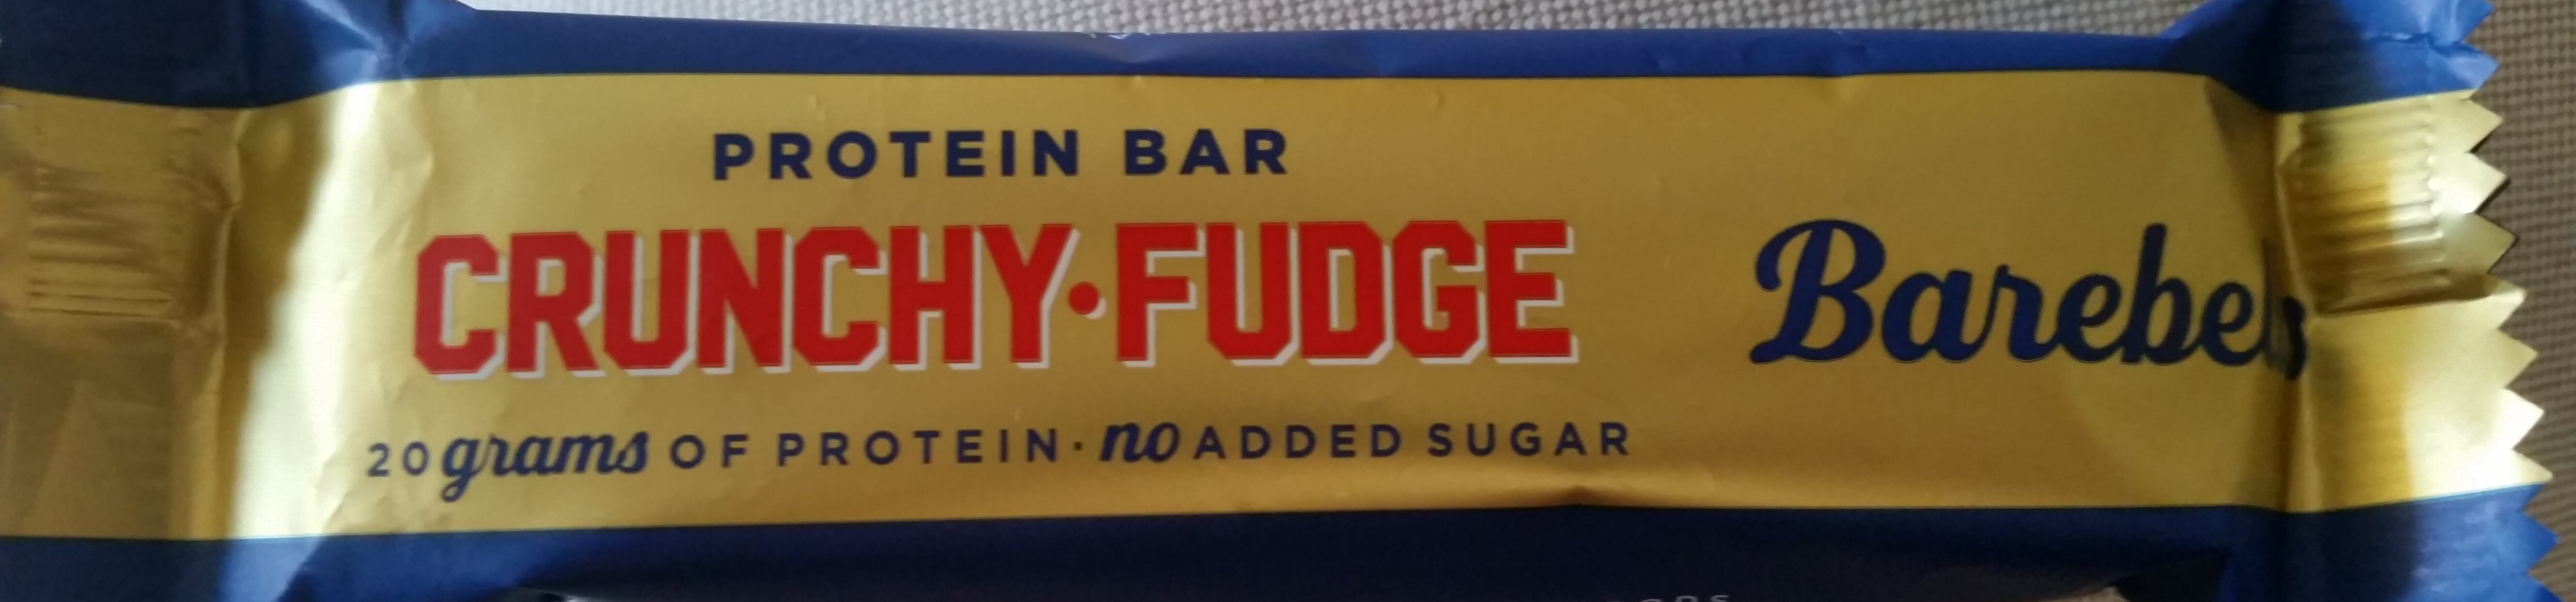 Protein Bar Crunchy Fudge - Product